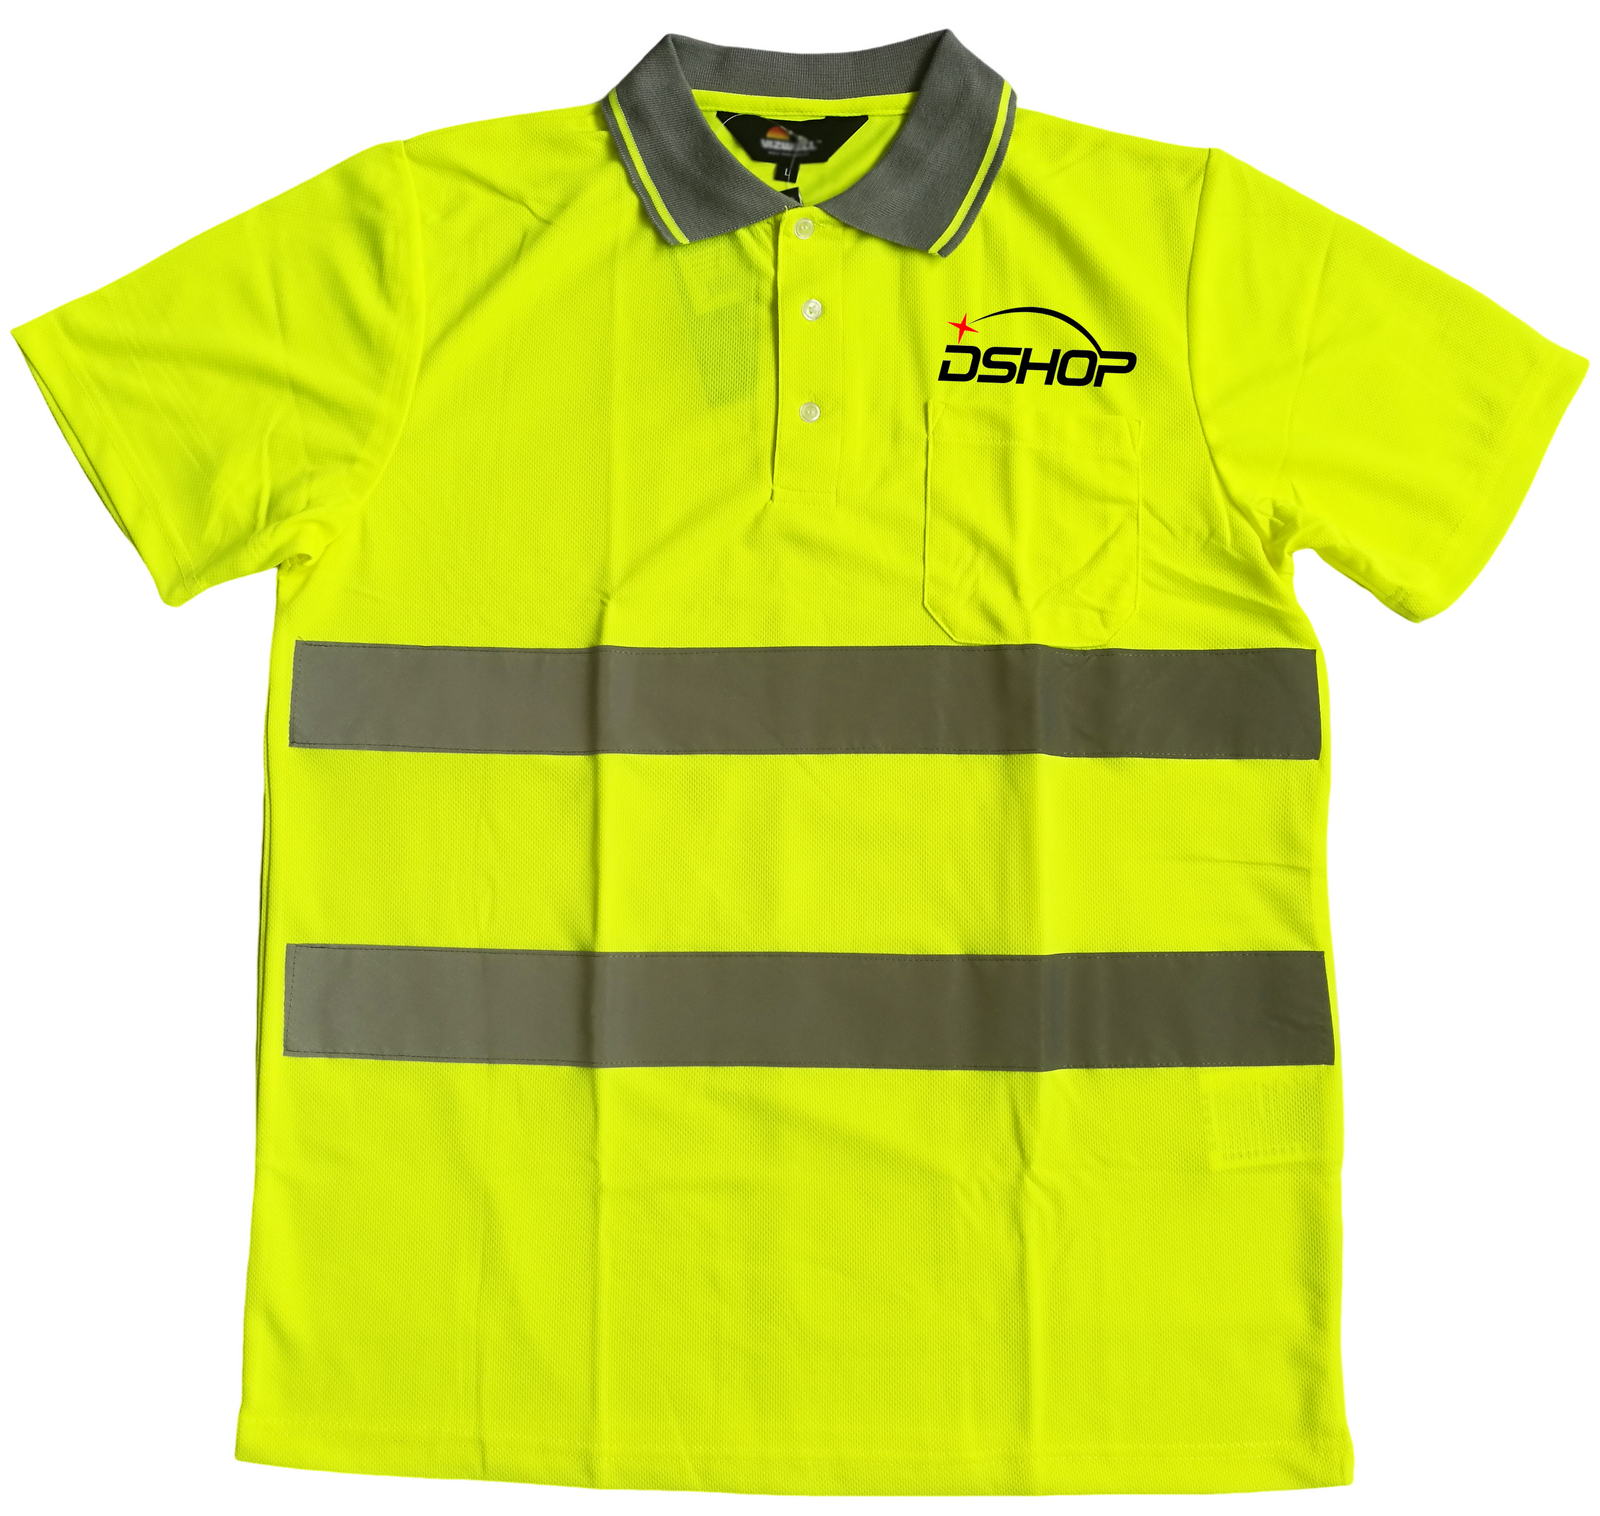 Dshop HI VIS Shirt Reflective Polo Safety Workwear [Size: S]